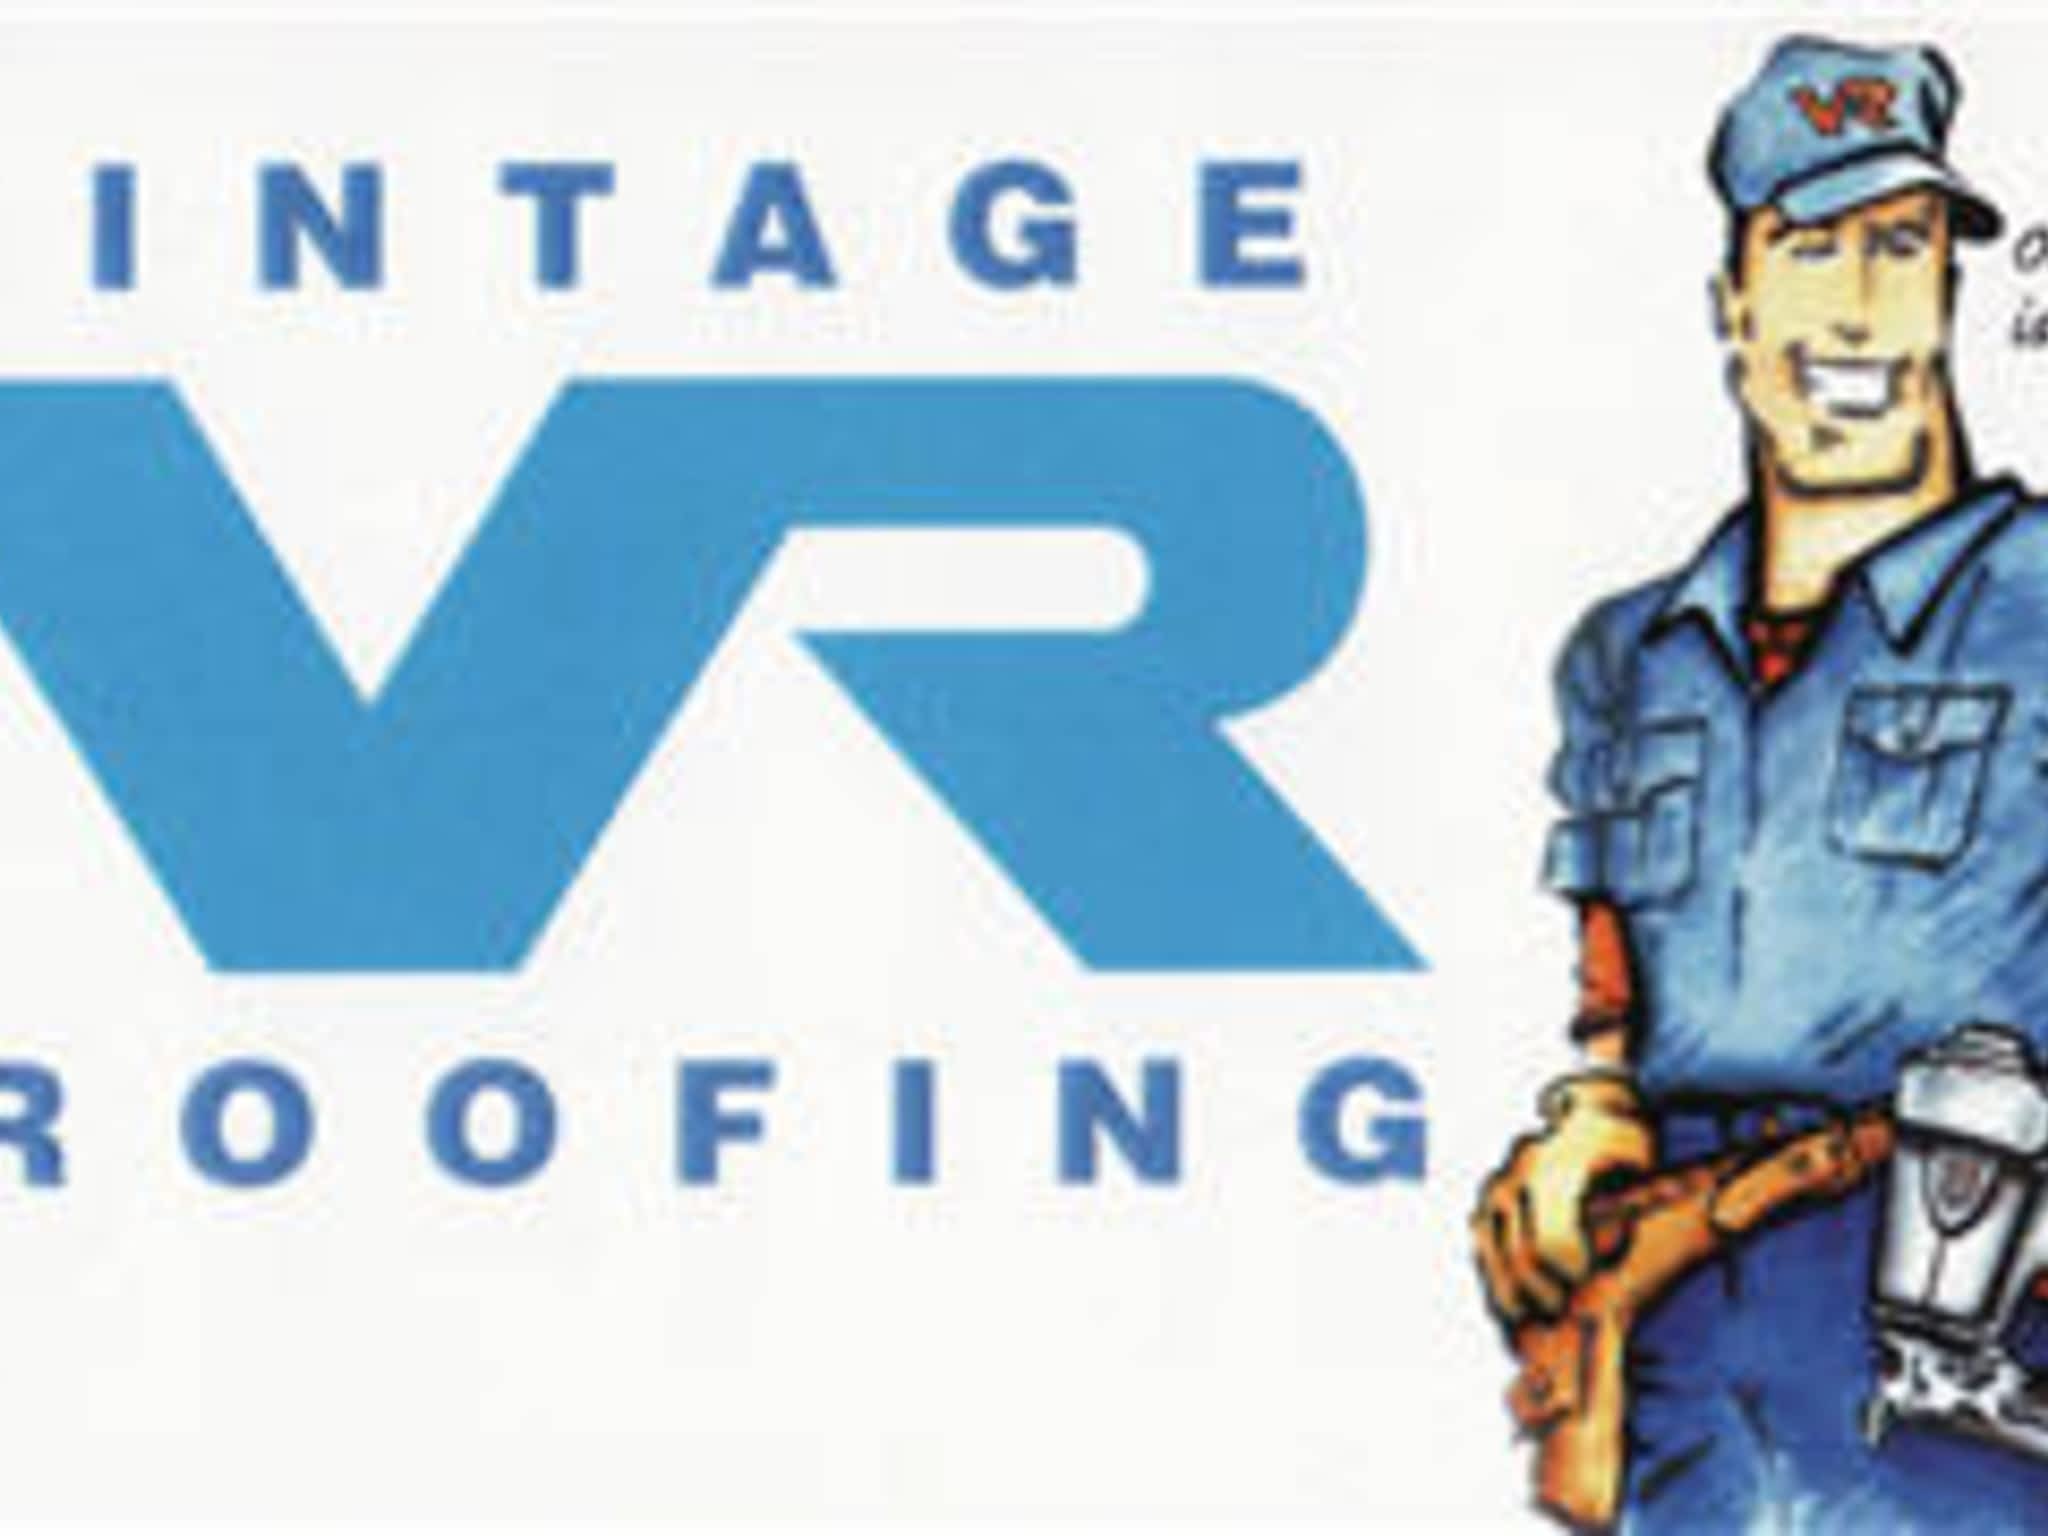 photo Vintage Roofing Ltd